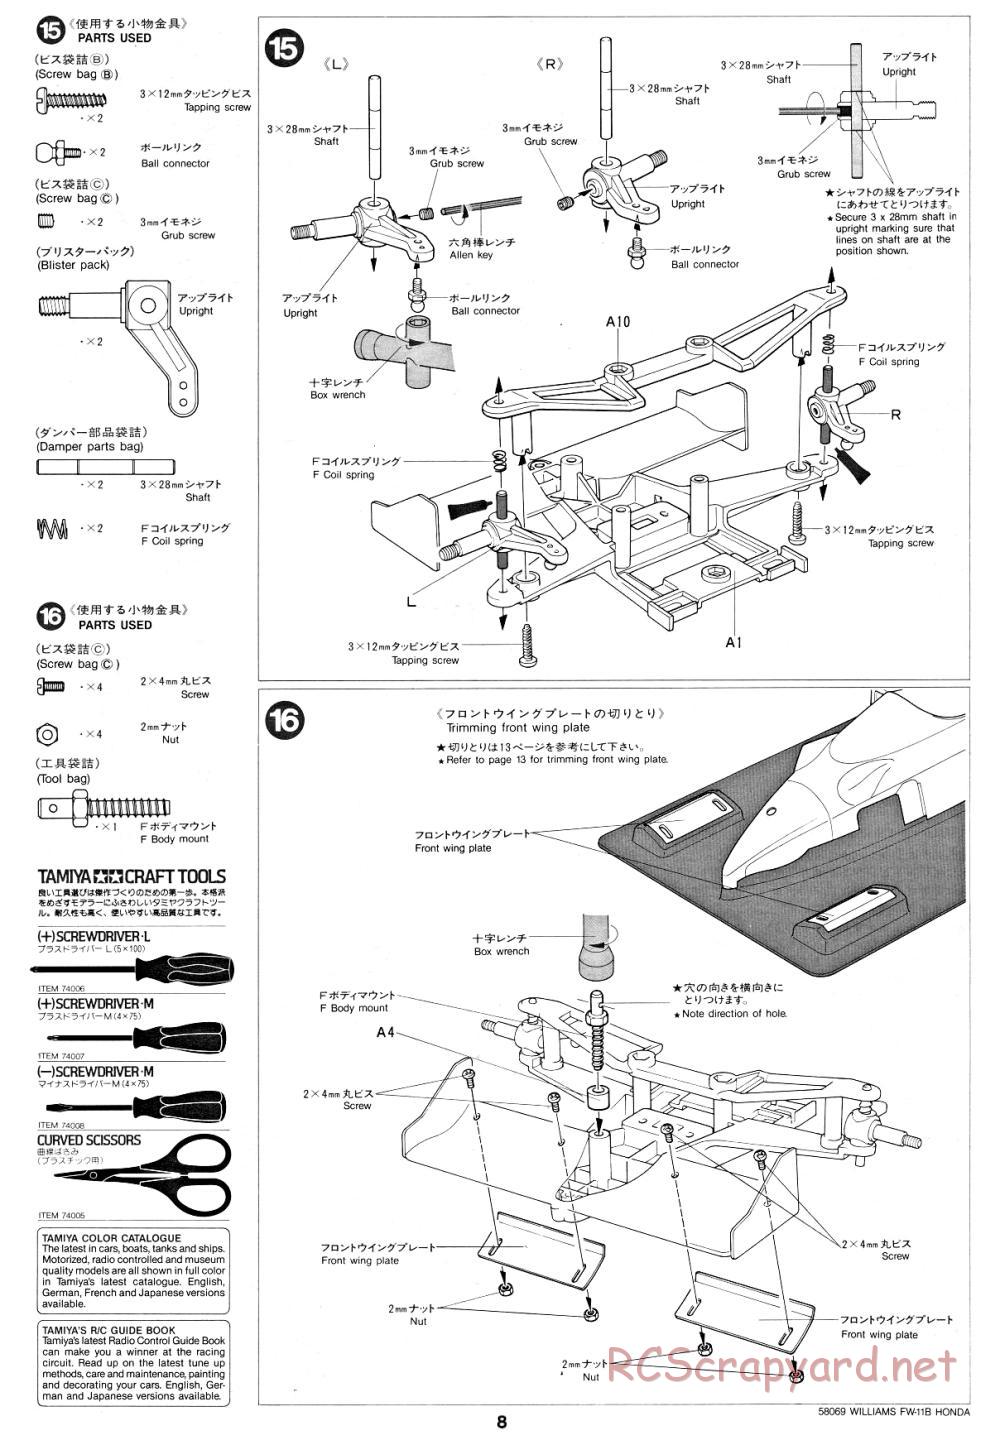 Tamiya - Williams FW-11B Honda F1 - 58069 - Manual - Page 8